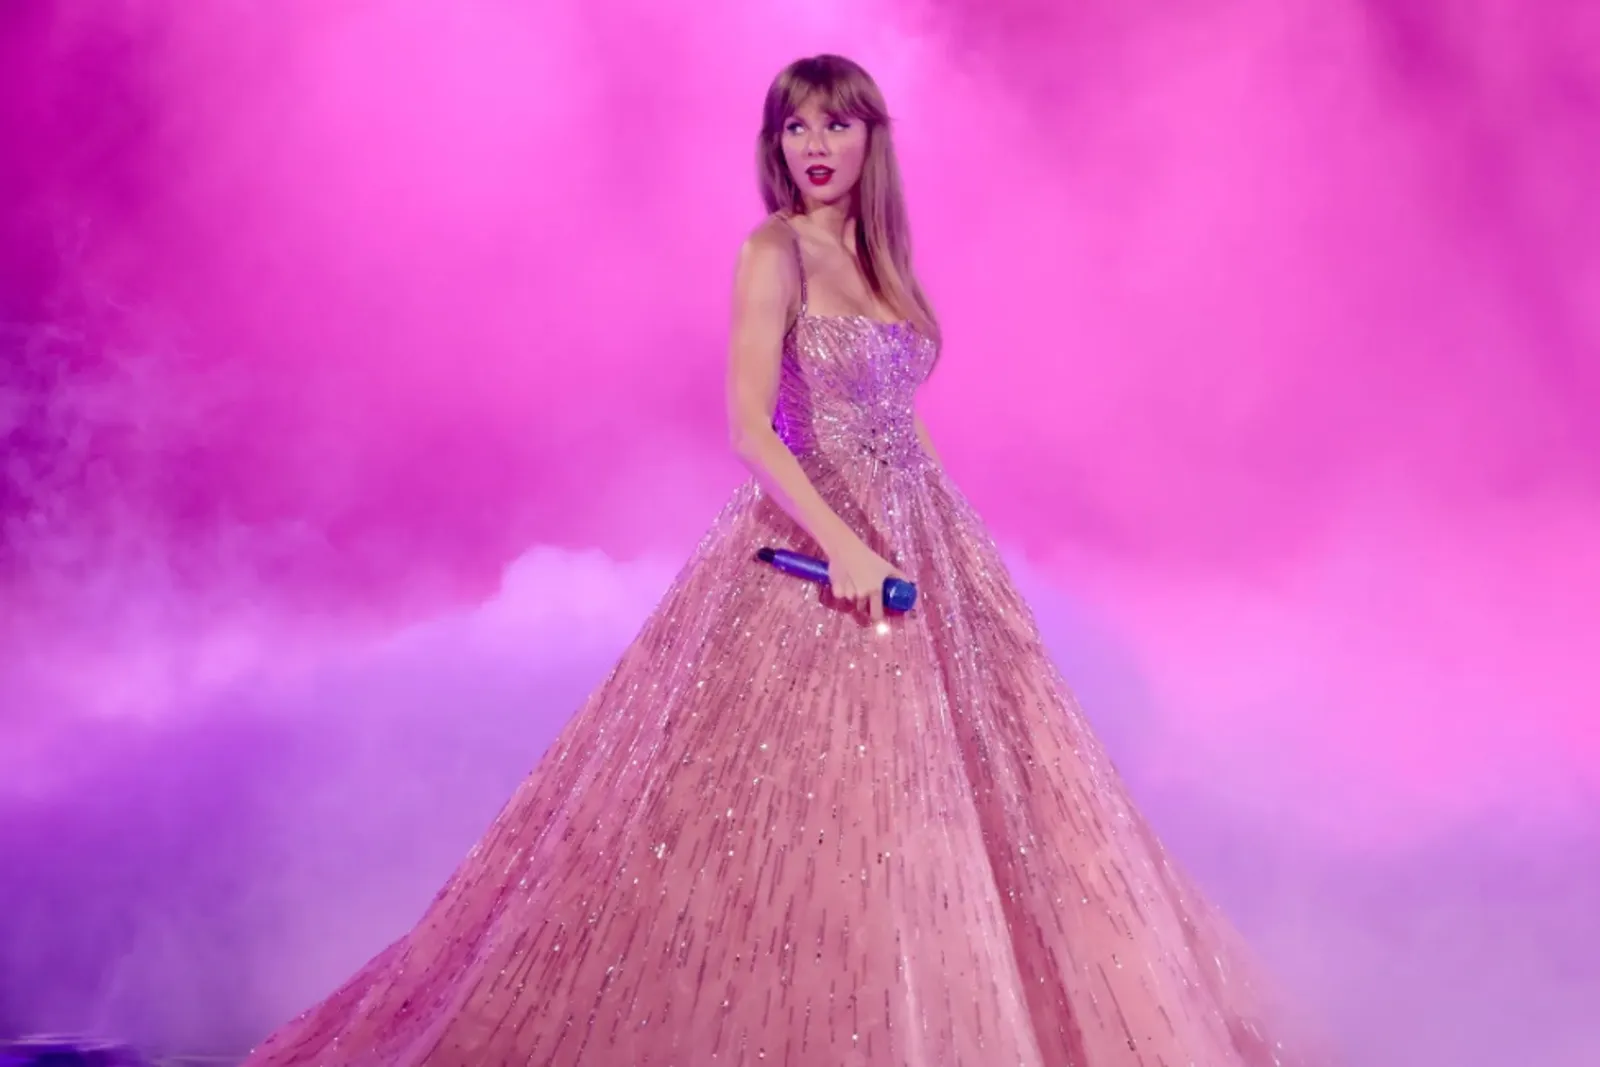 Lirik "Enchanted" - Taylor Swift, Manisnya Cinta Pandangan Pertama